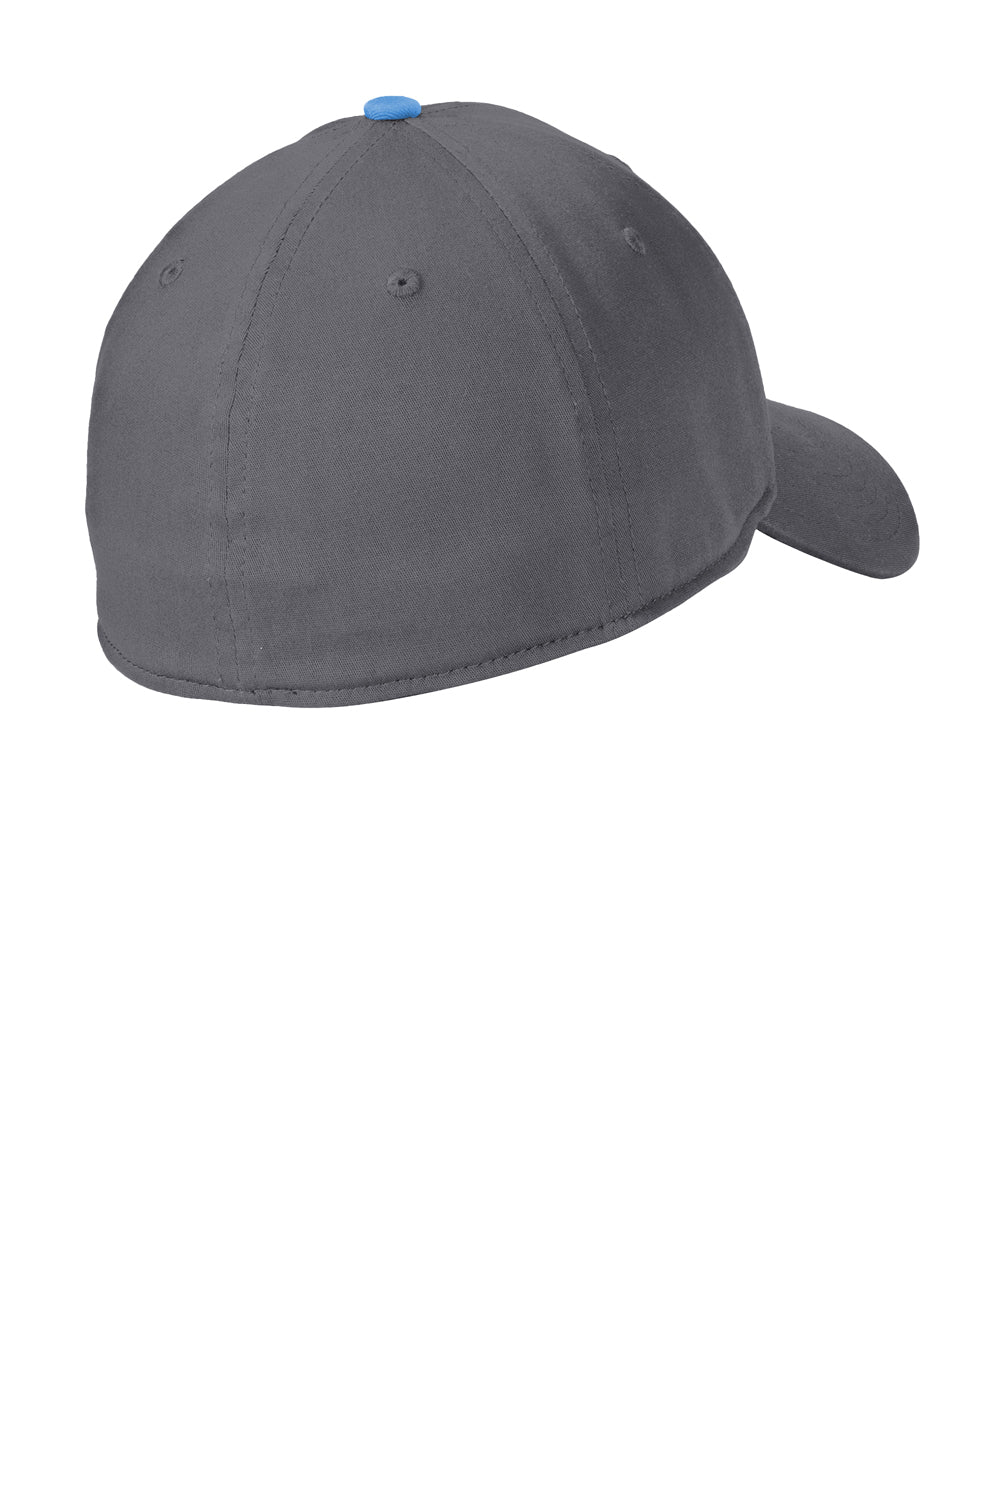 New Era Mens Stretch Fit Hat Graphite Grey/Sky Blue Back